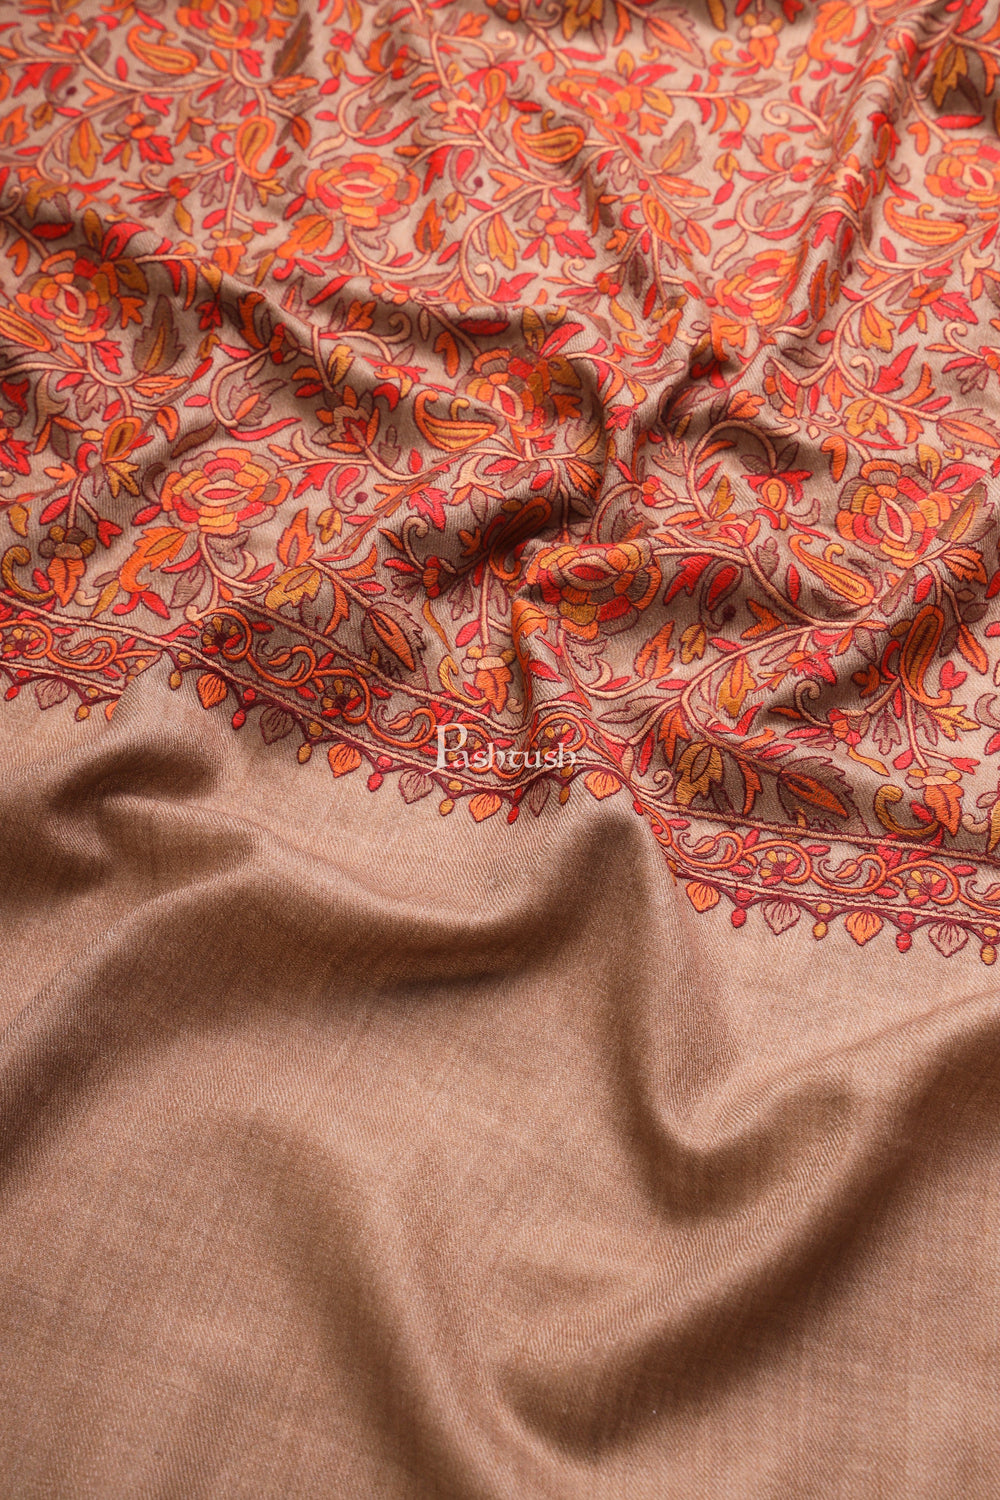 Pashtush India Womens Shawls Pashtush Womens Fine Wool Shawl, Embroidery Jaal Design, Taupe